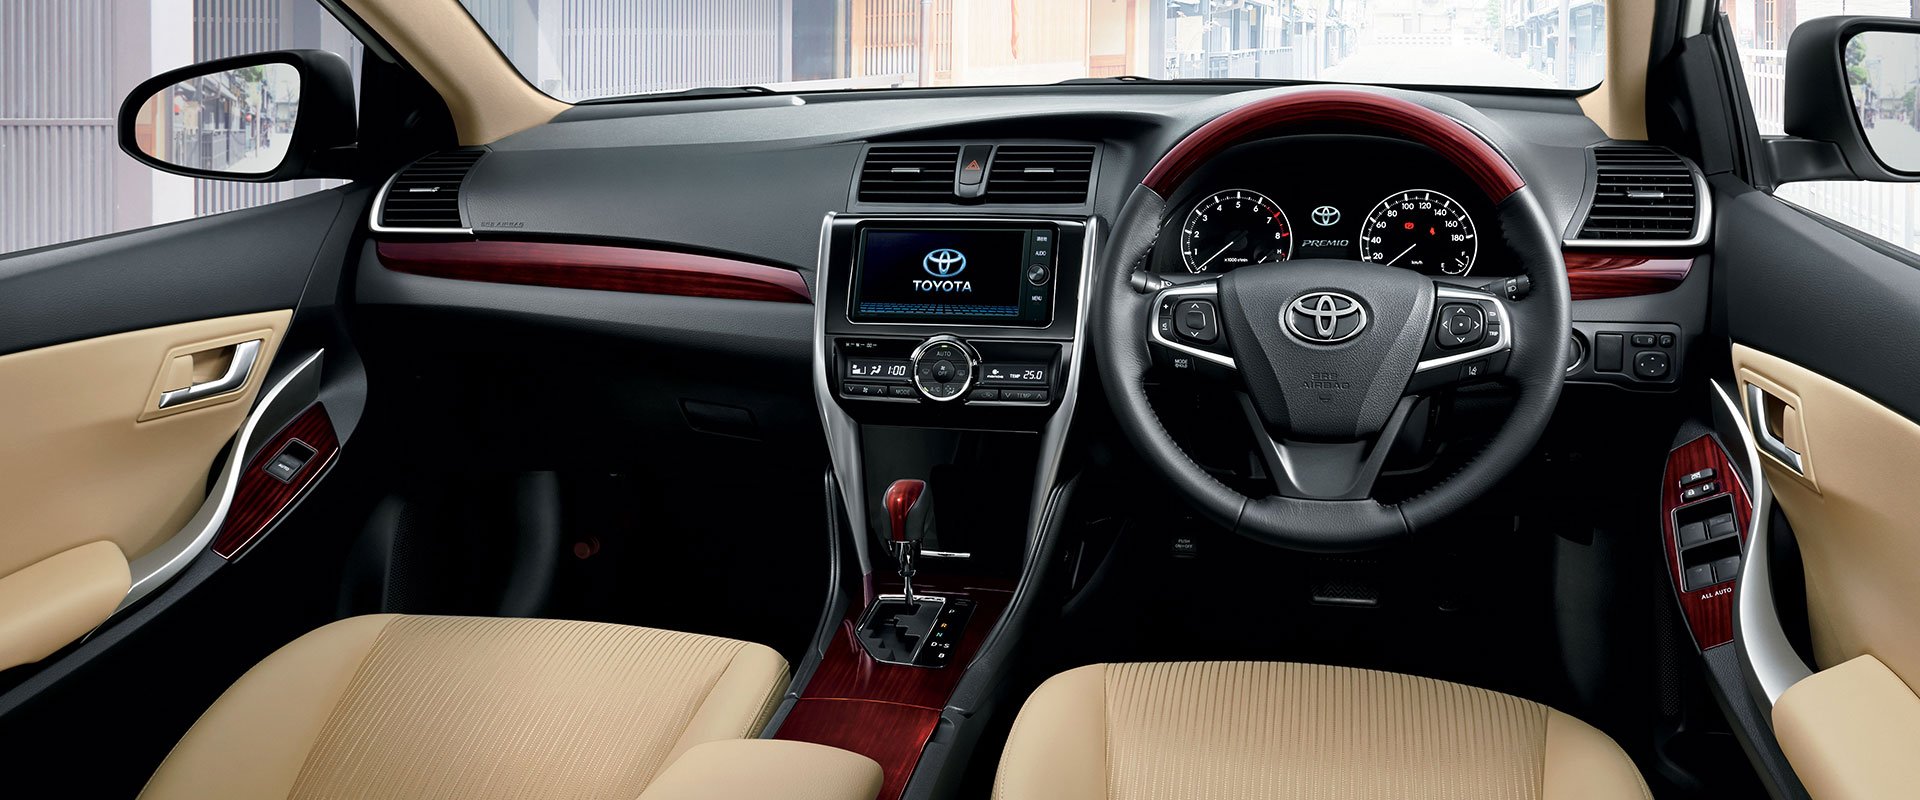 Toyota Premio interior - Cockpit